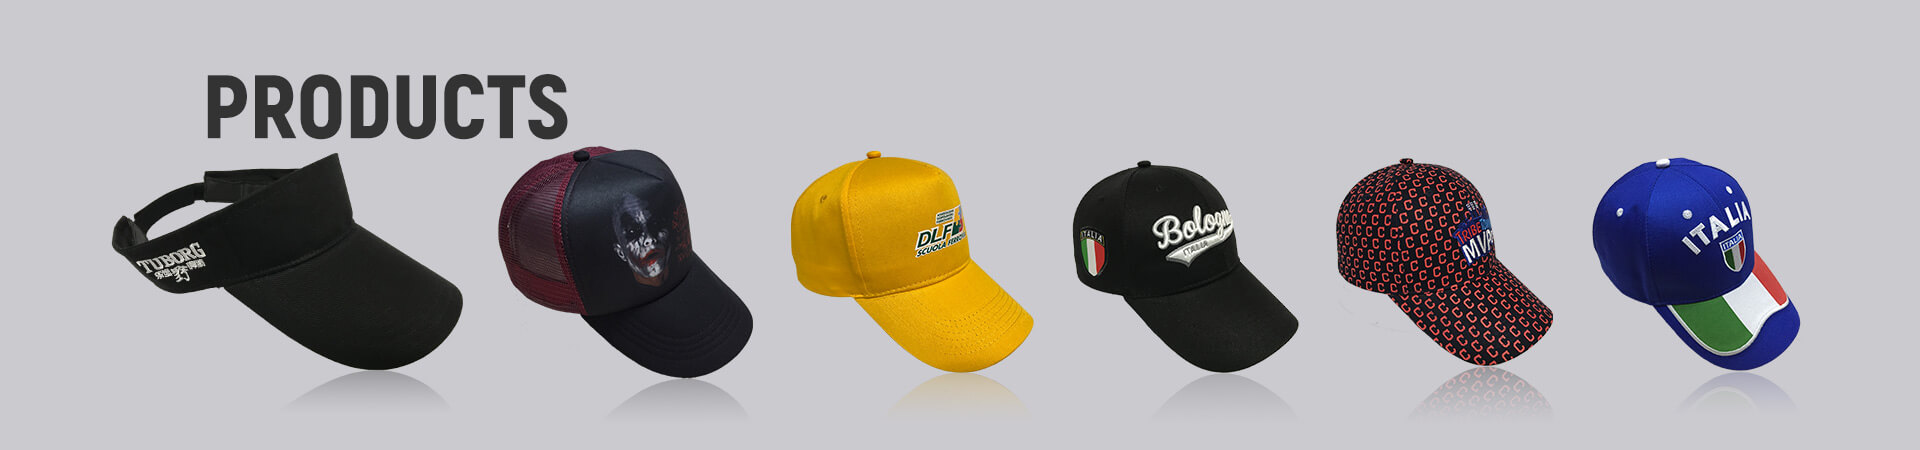 Products Archives - Baseball Cap,Sports Cap,Golf Cap,Bucket Hat,Fisherman Hat,Trucker Hat